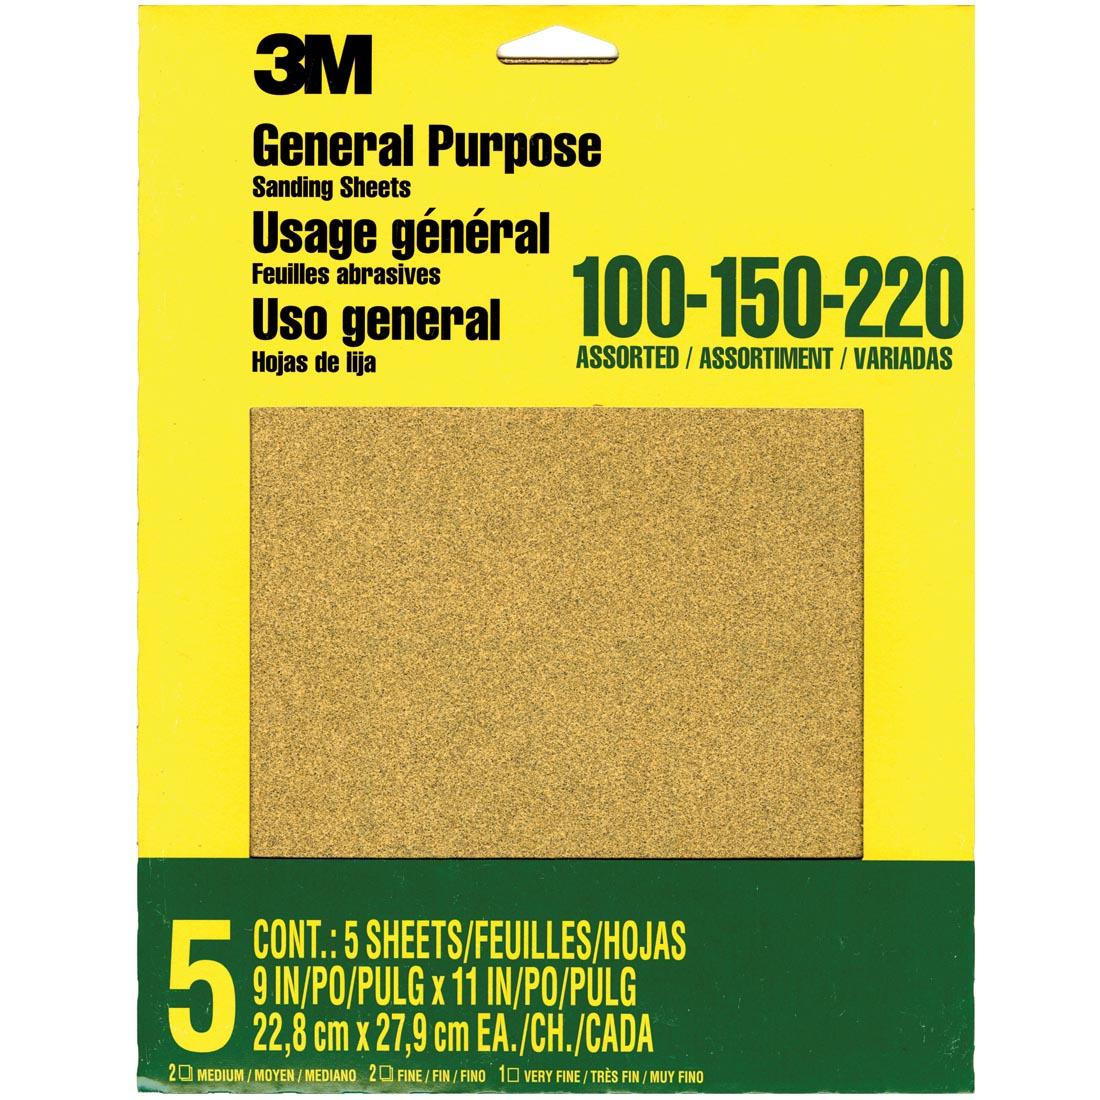 3M General Purpose Sandpaper Assortment